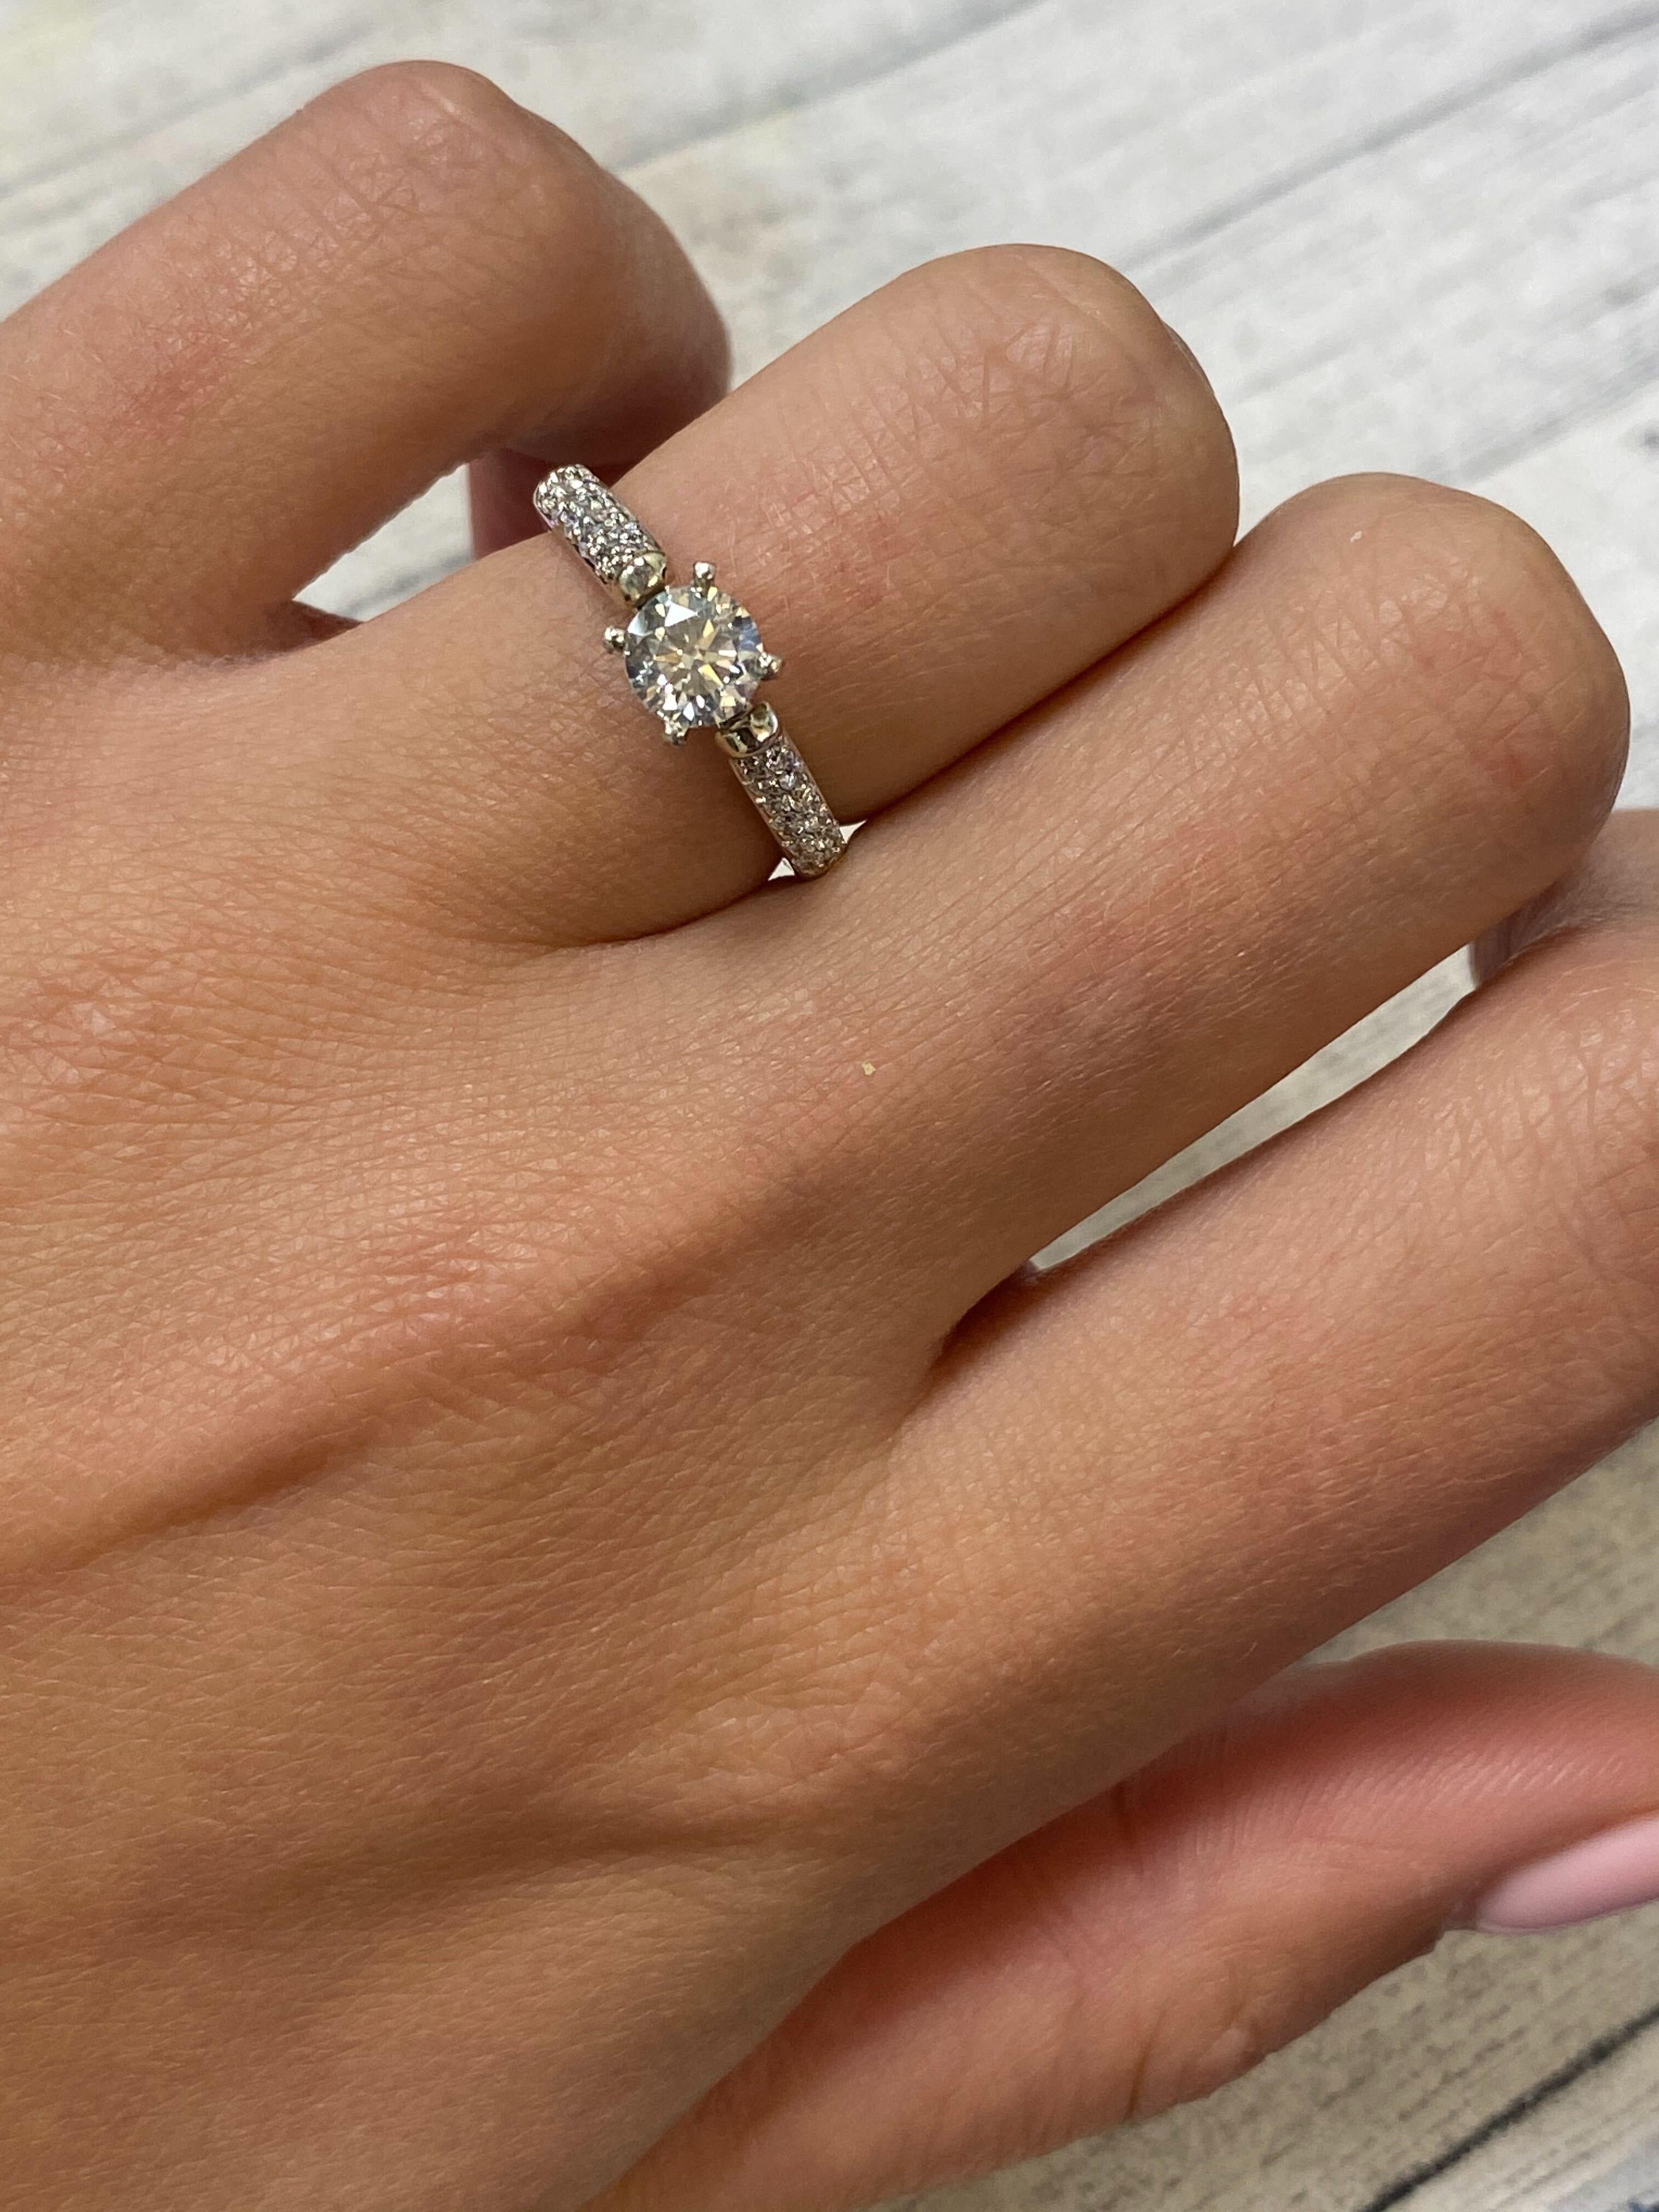 Rachel Koen 14 Karat White Gold Round Cut Diamond Engagement Ring 0.75 Carat For Sale 1